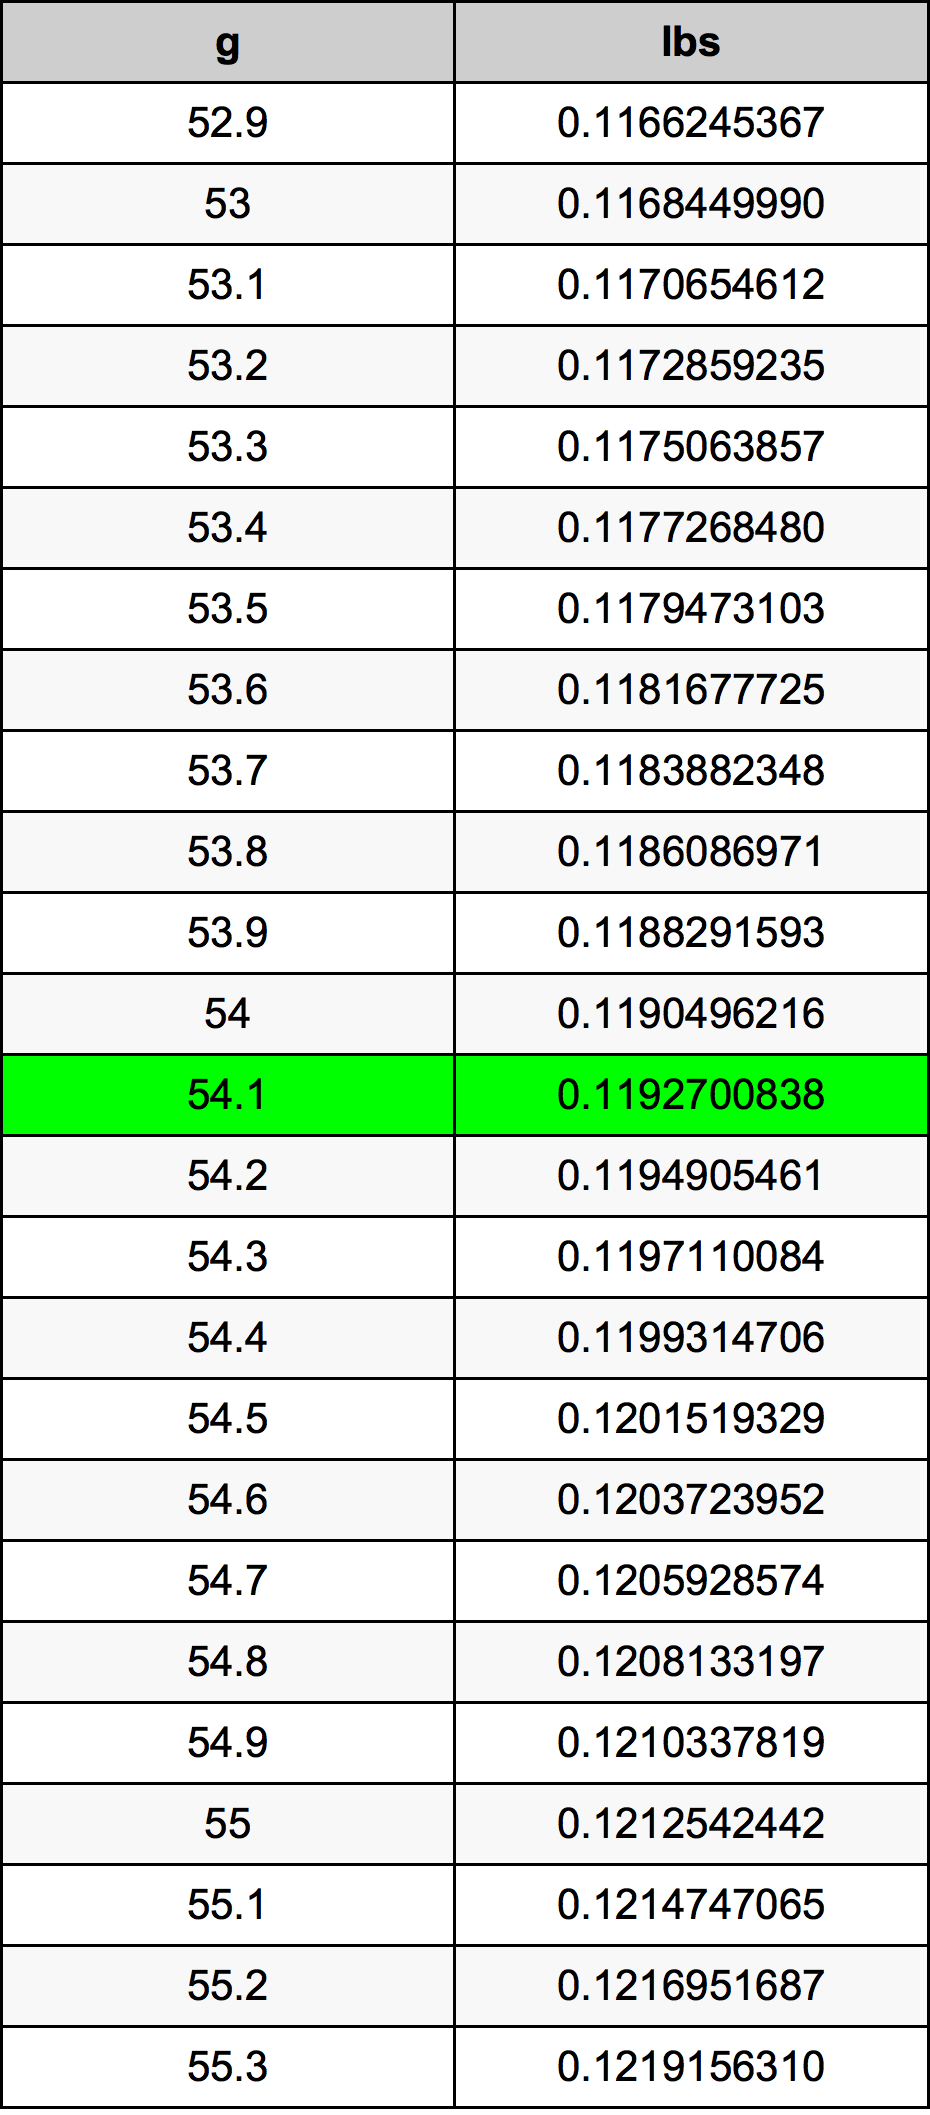 54.1 غرام جدول تحويل